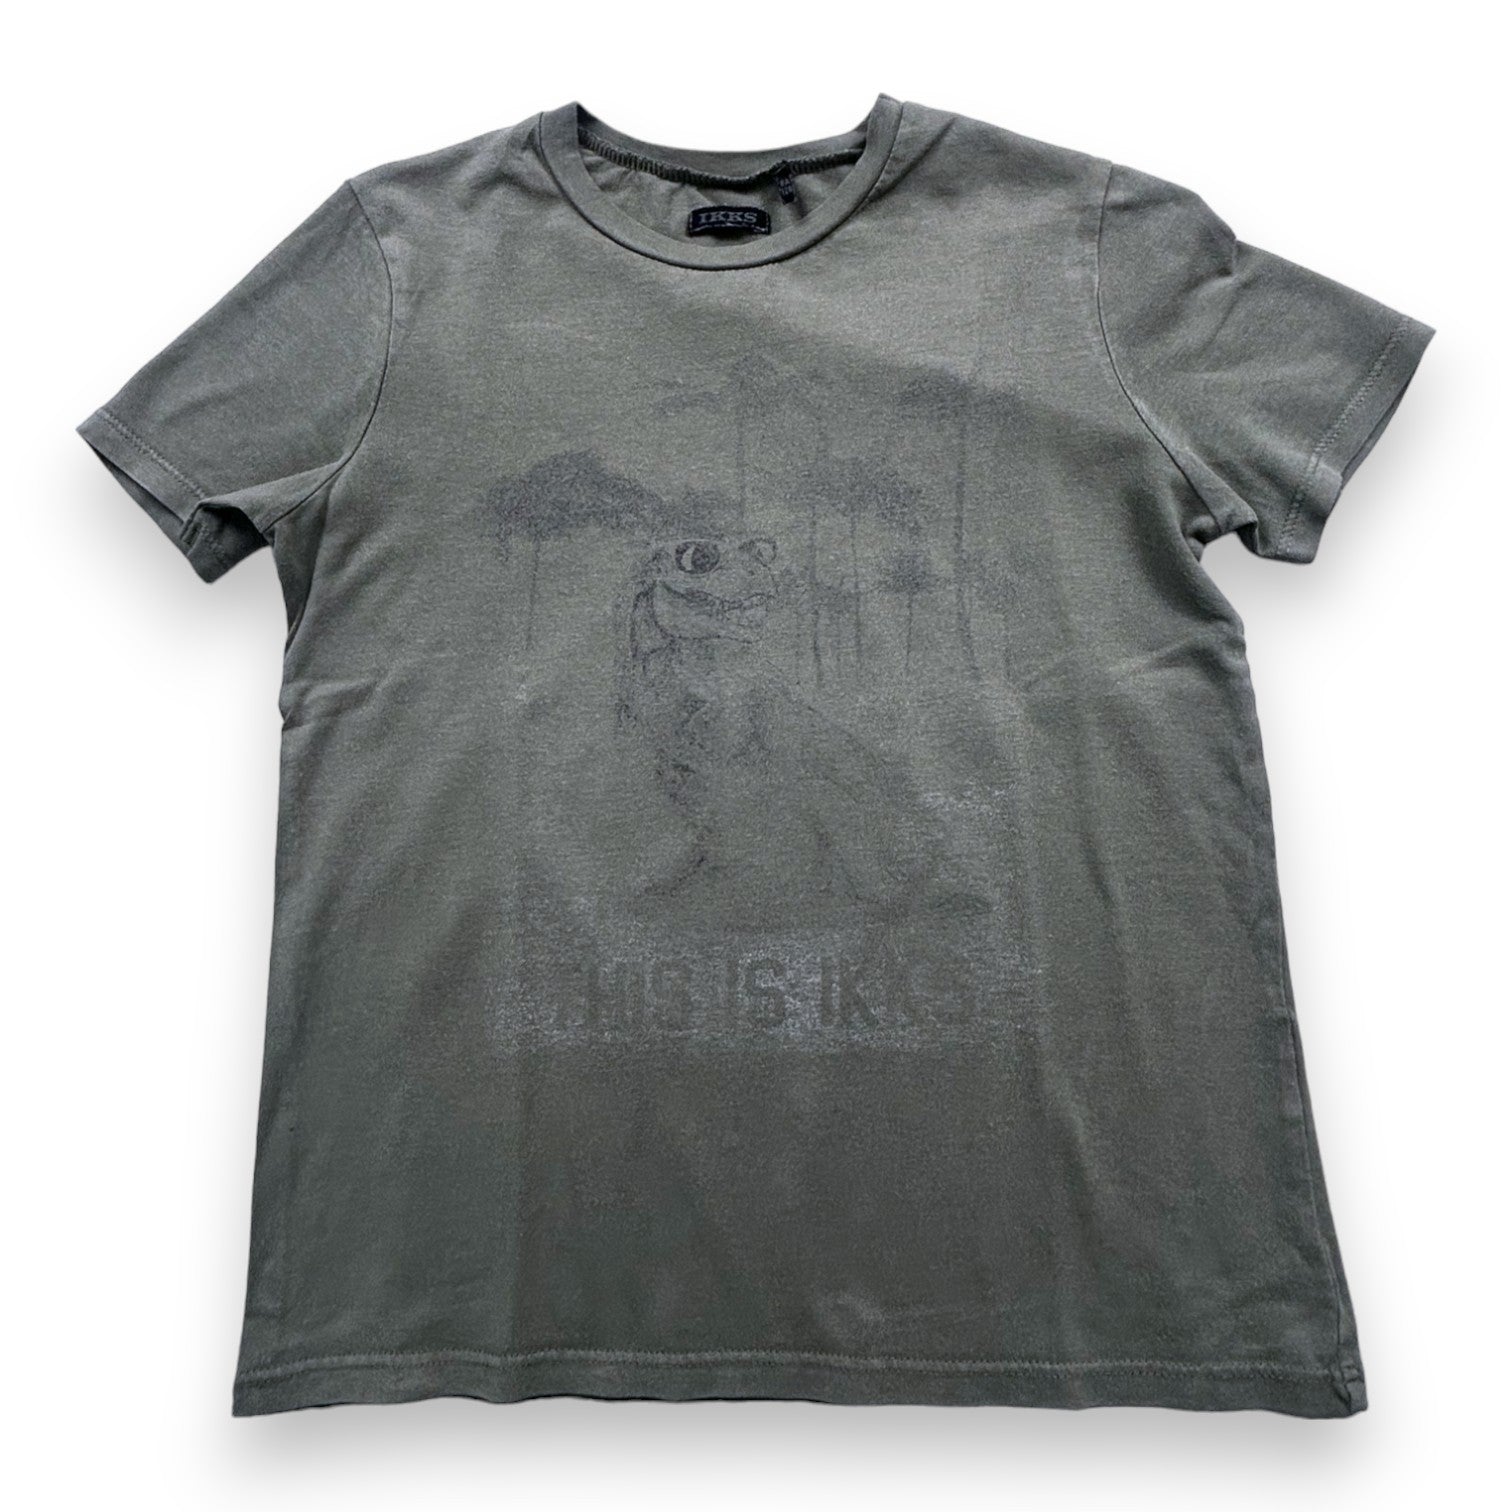 IKKS - T-shirt kaki imprimé Jurassic Park - 8 ans